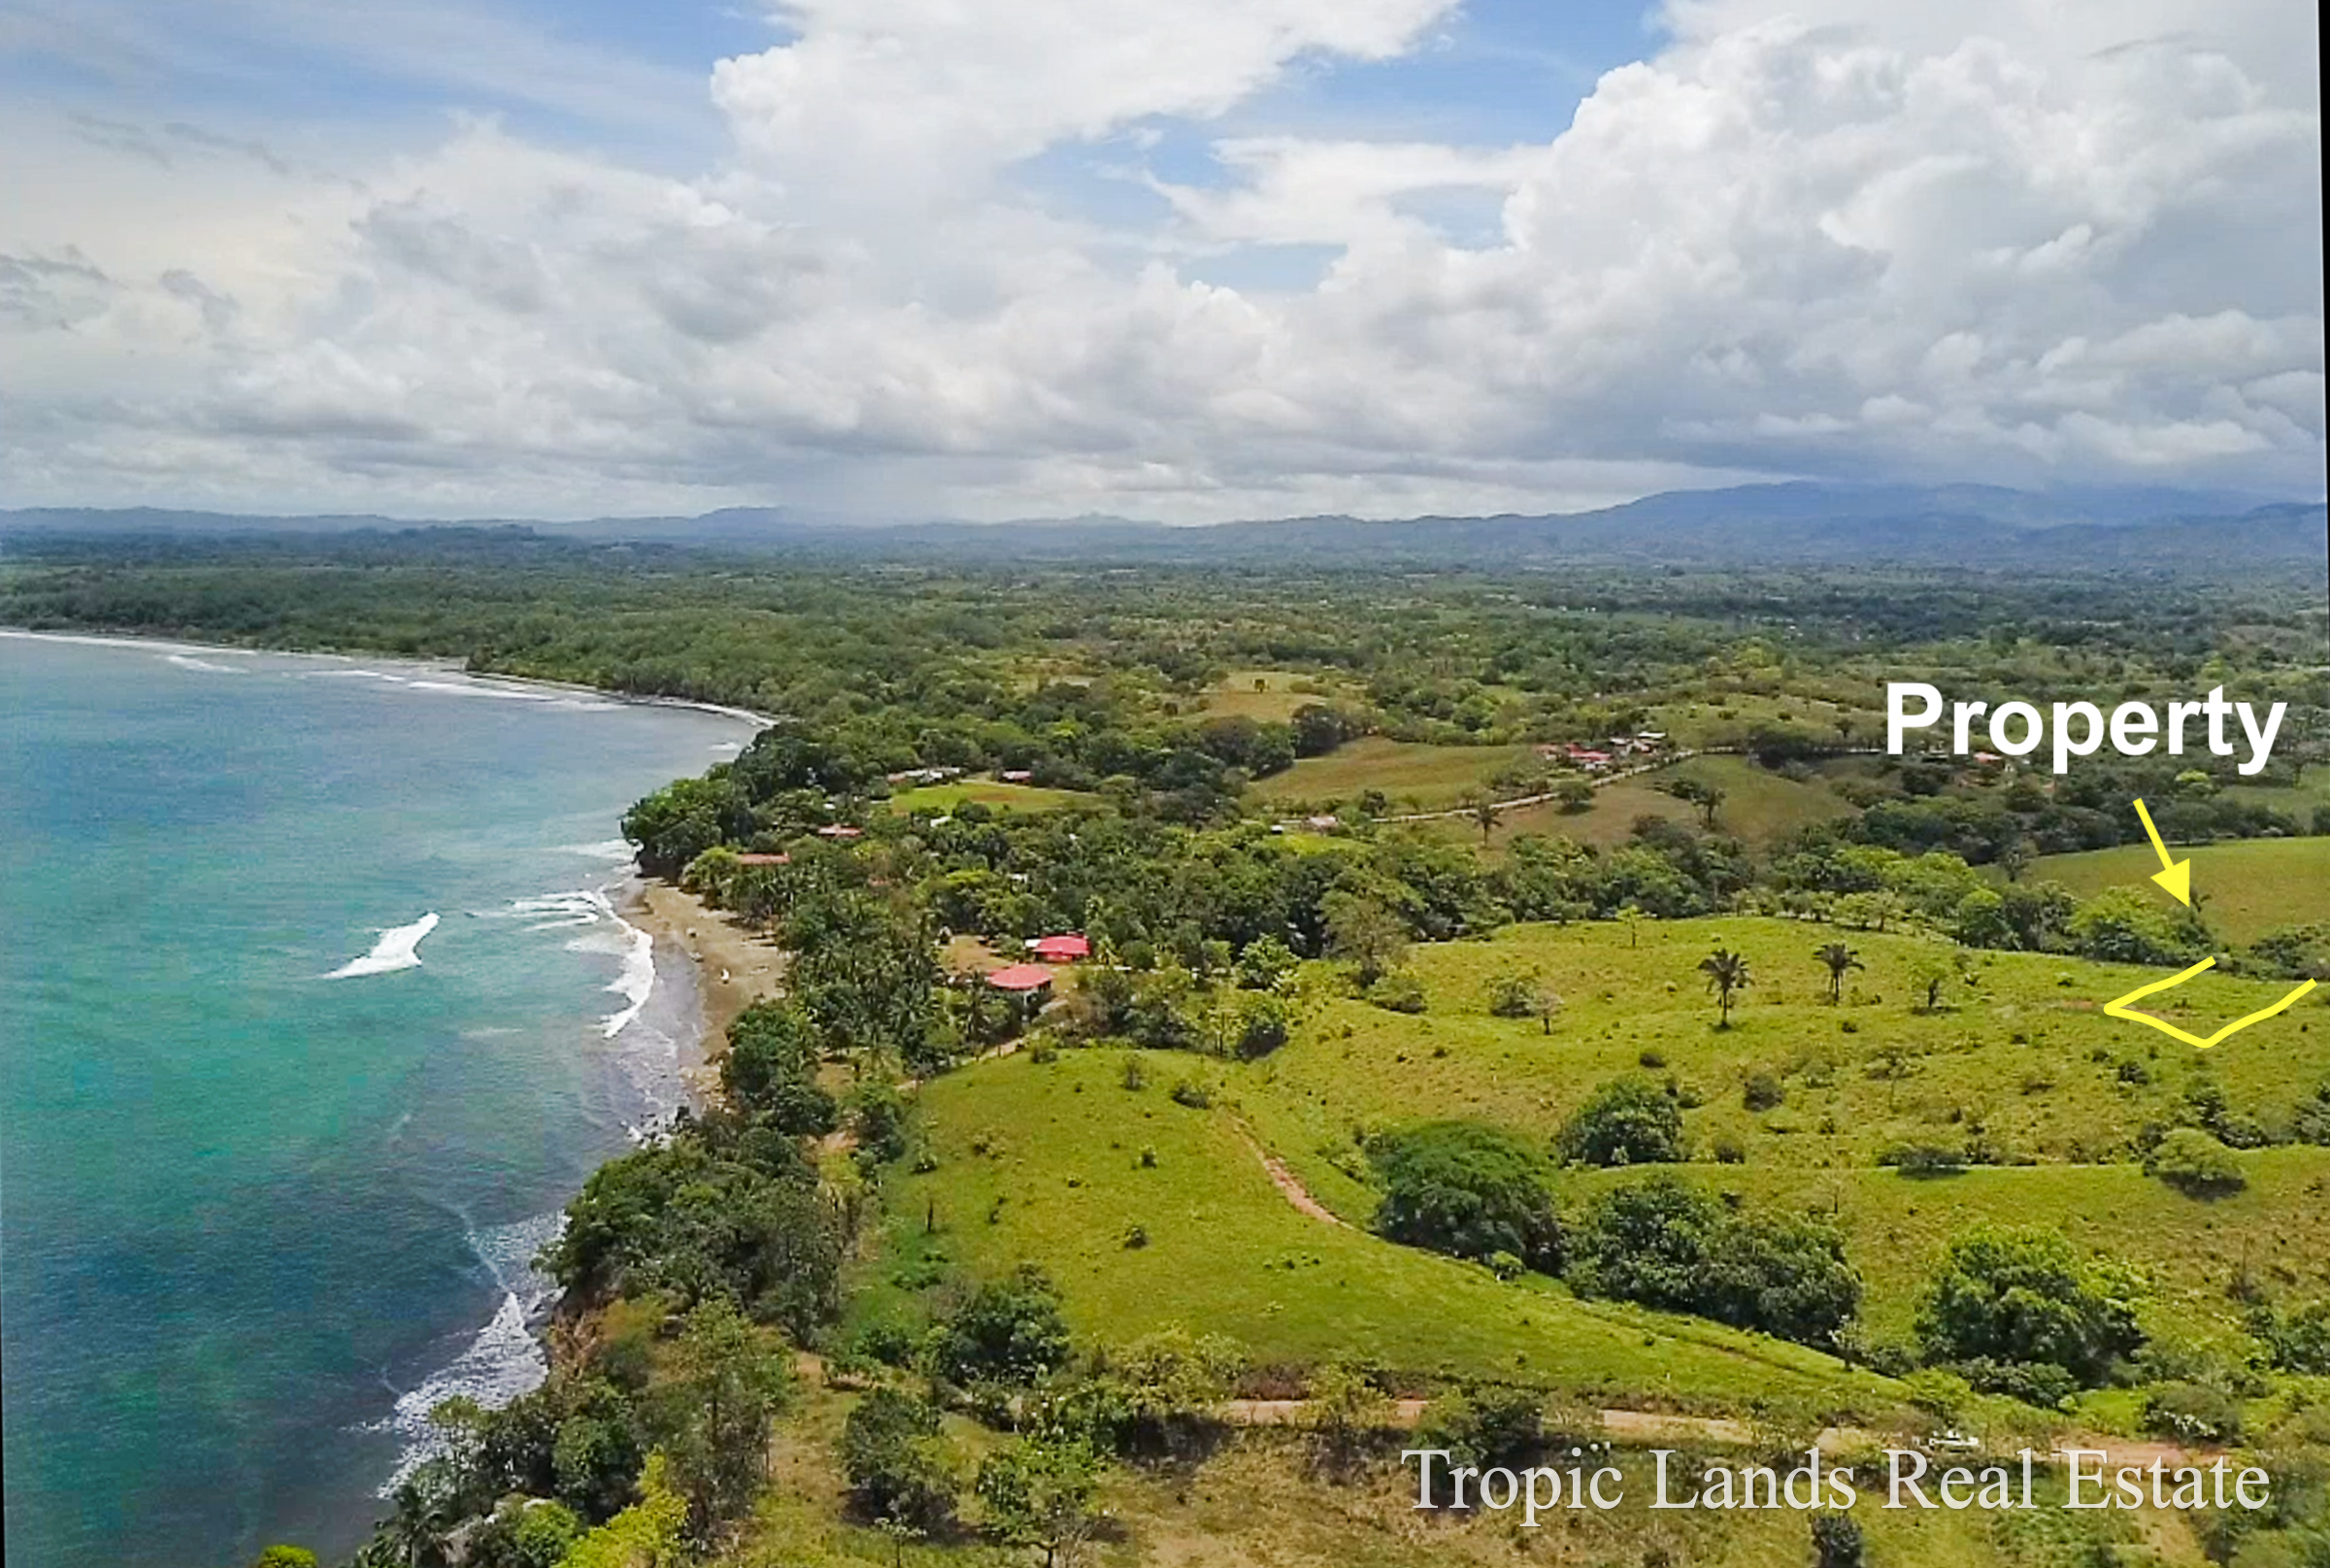 ocean view property for sale Mariato palo seco torio veraguas